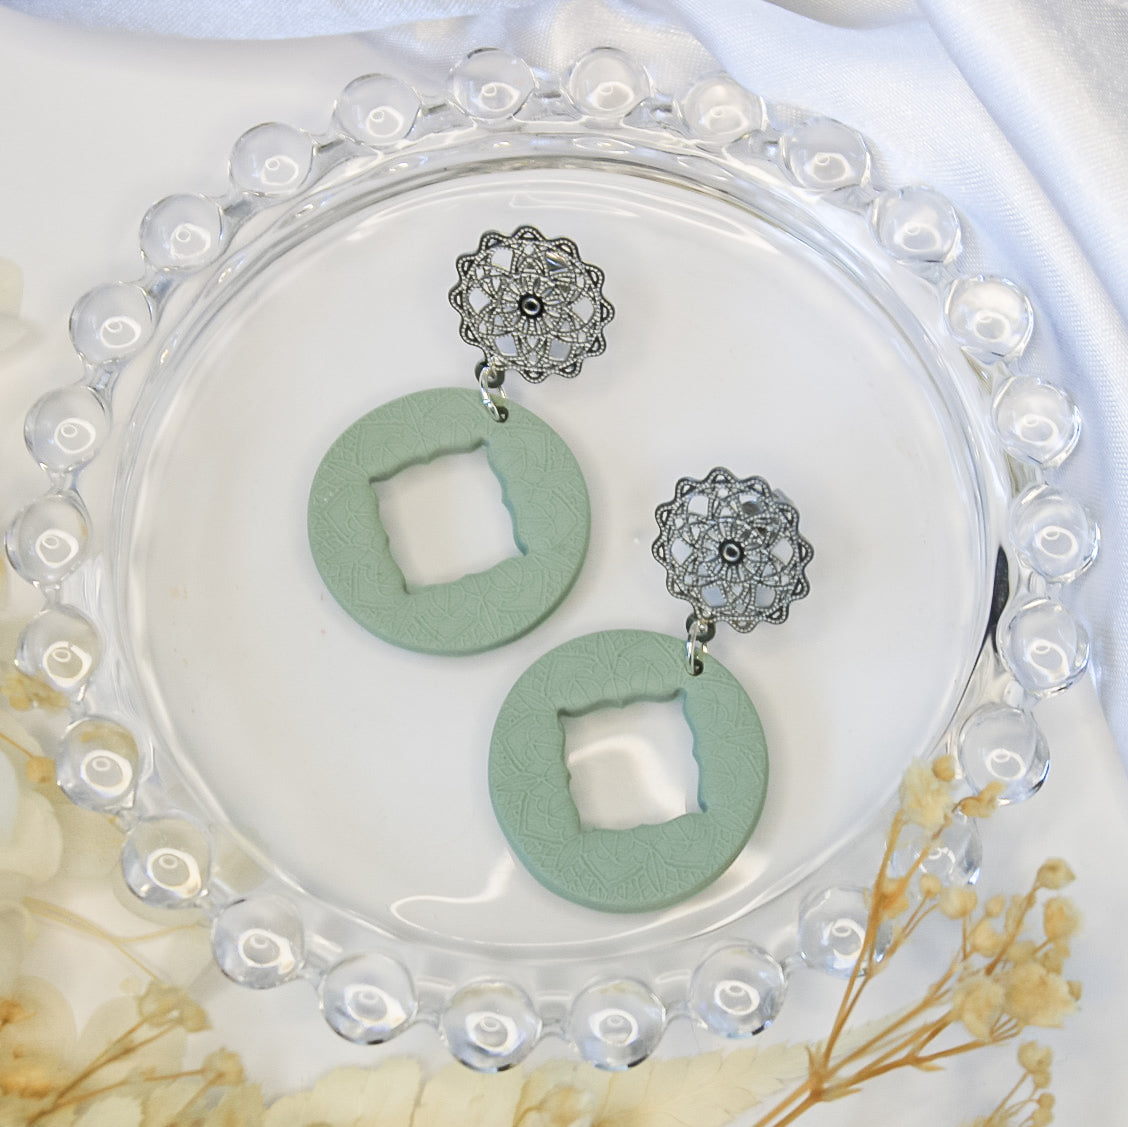 Mandala-inspired earrings – earthy sage green hue